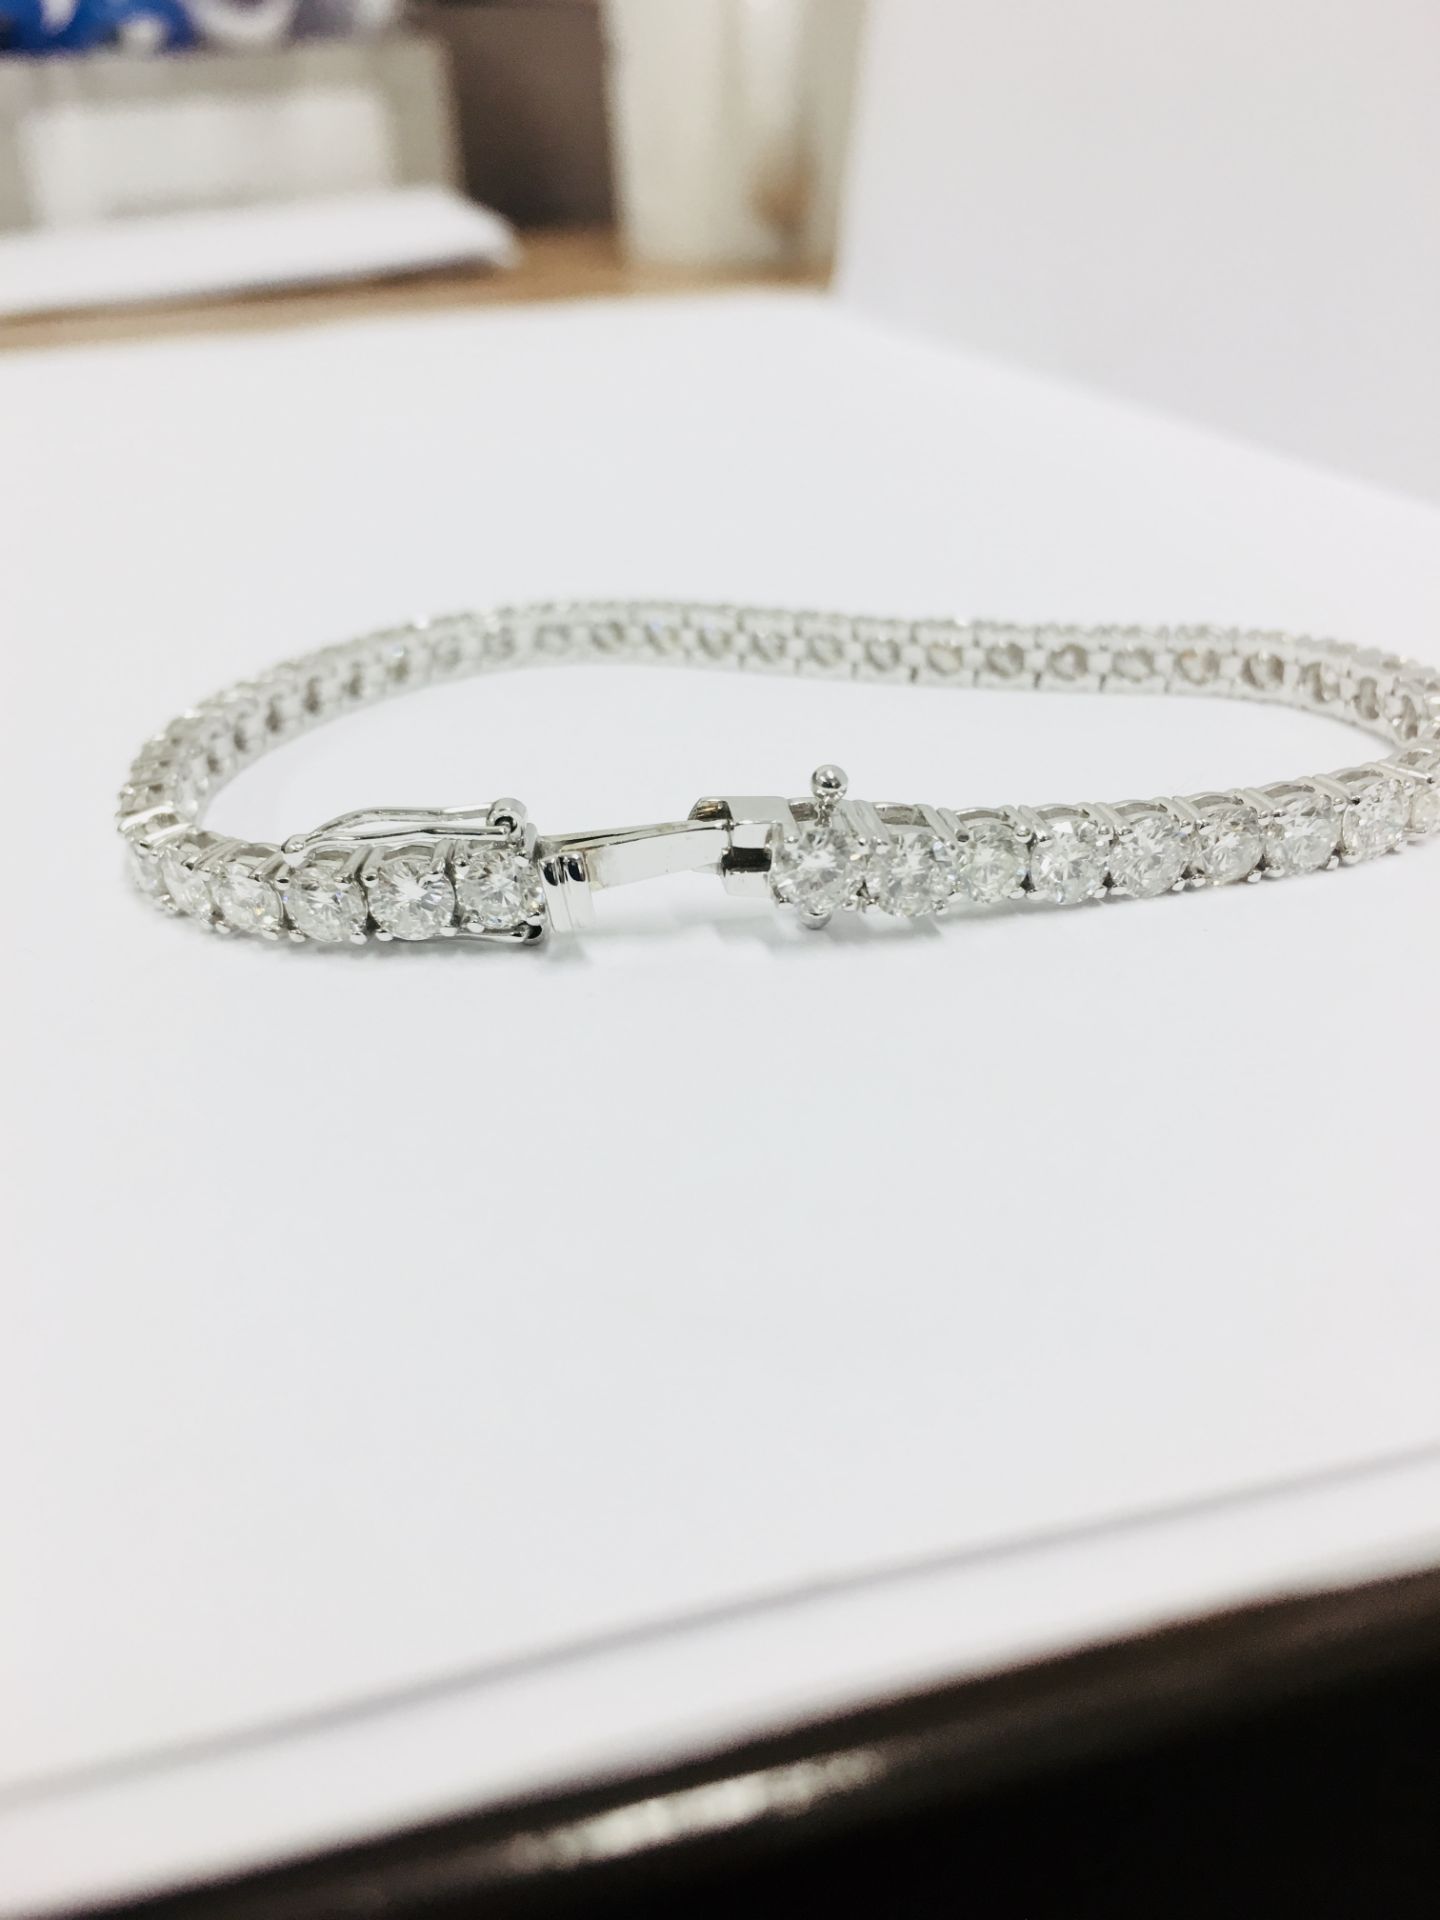 10.00ct Diamond tennis bracelet set with brilliant cut diamonds of I/J colour, si2-3 clarity. All - Bild 2 aus 6